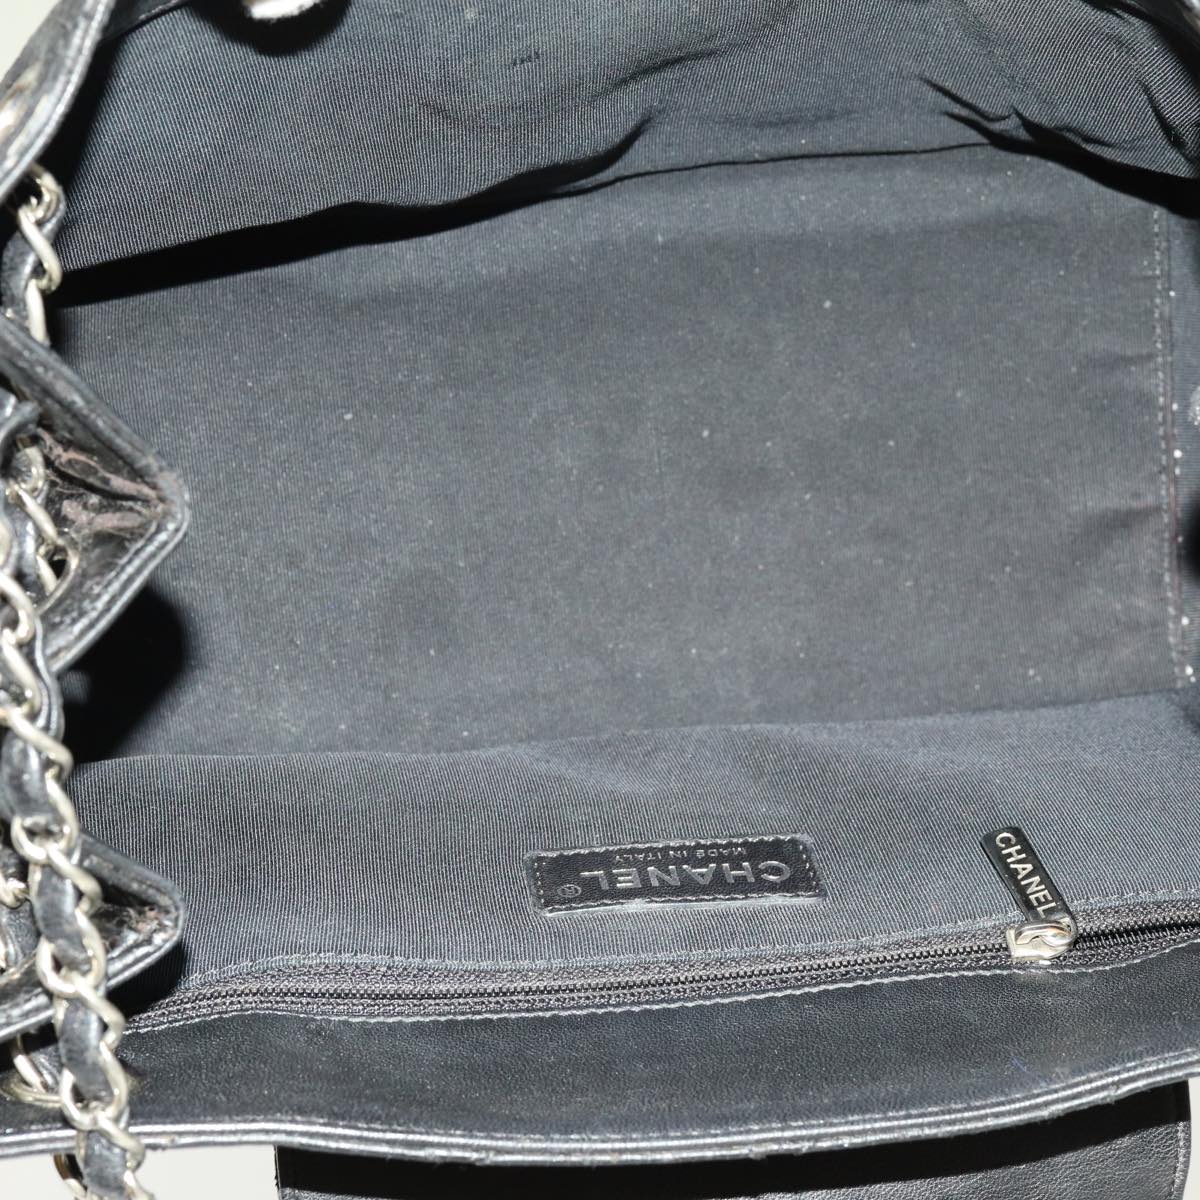 CHANEL Matelasse Chain Shoulder Bag Coated Canvas Black CC Auth 70257